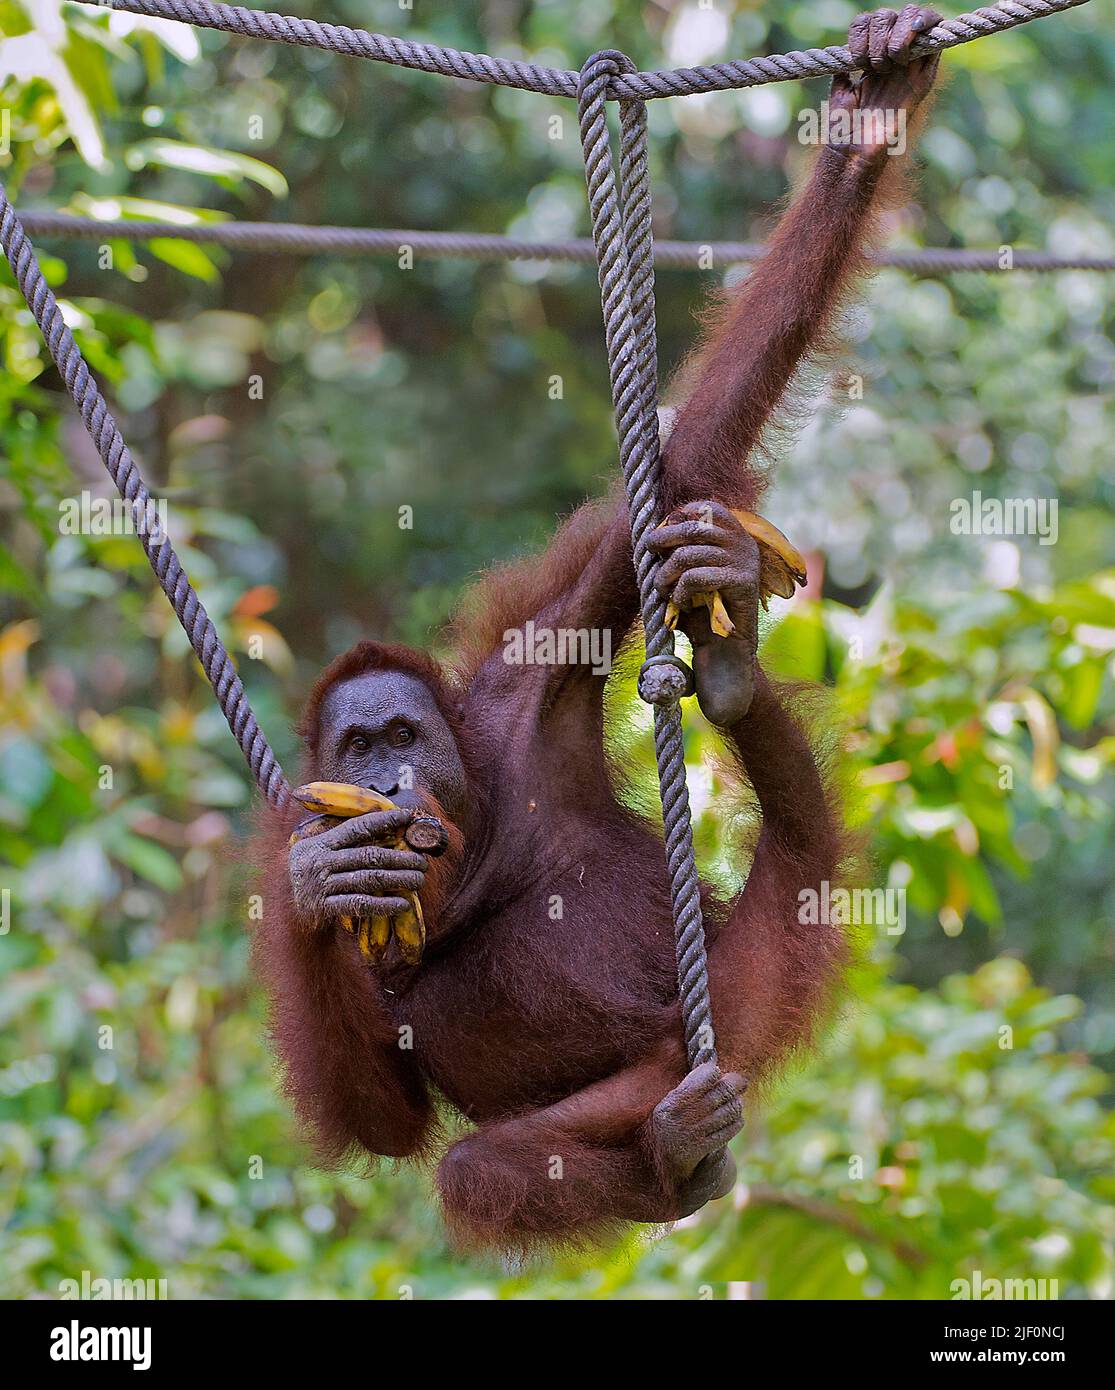 Adult, wild male orangutan feeding and playing in Sepilok Orangutan Rehabilitation Centre, Sabah, Borneo. Stock Photo